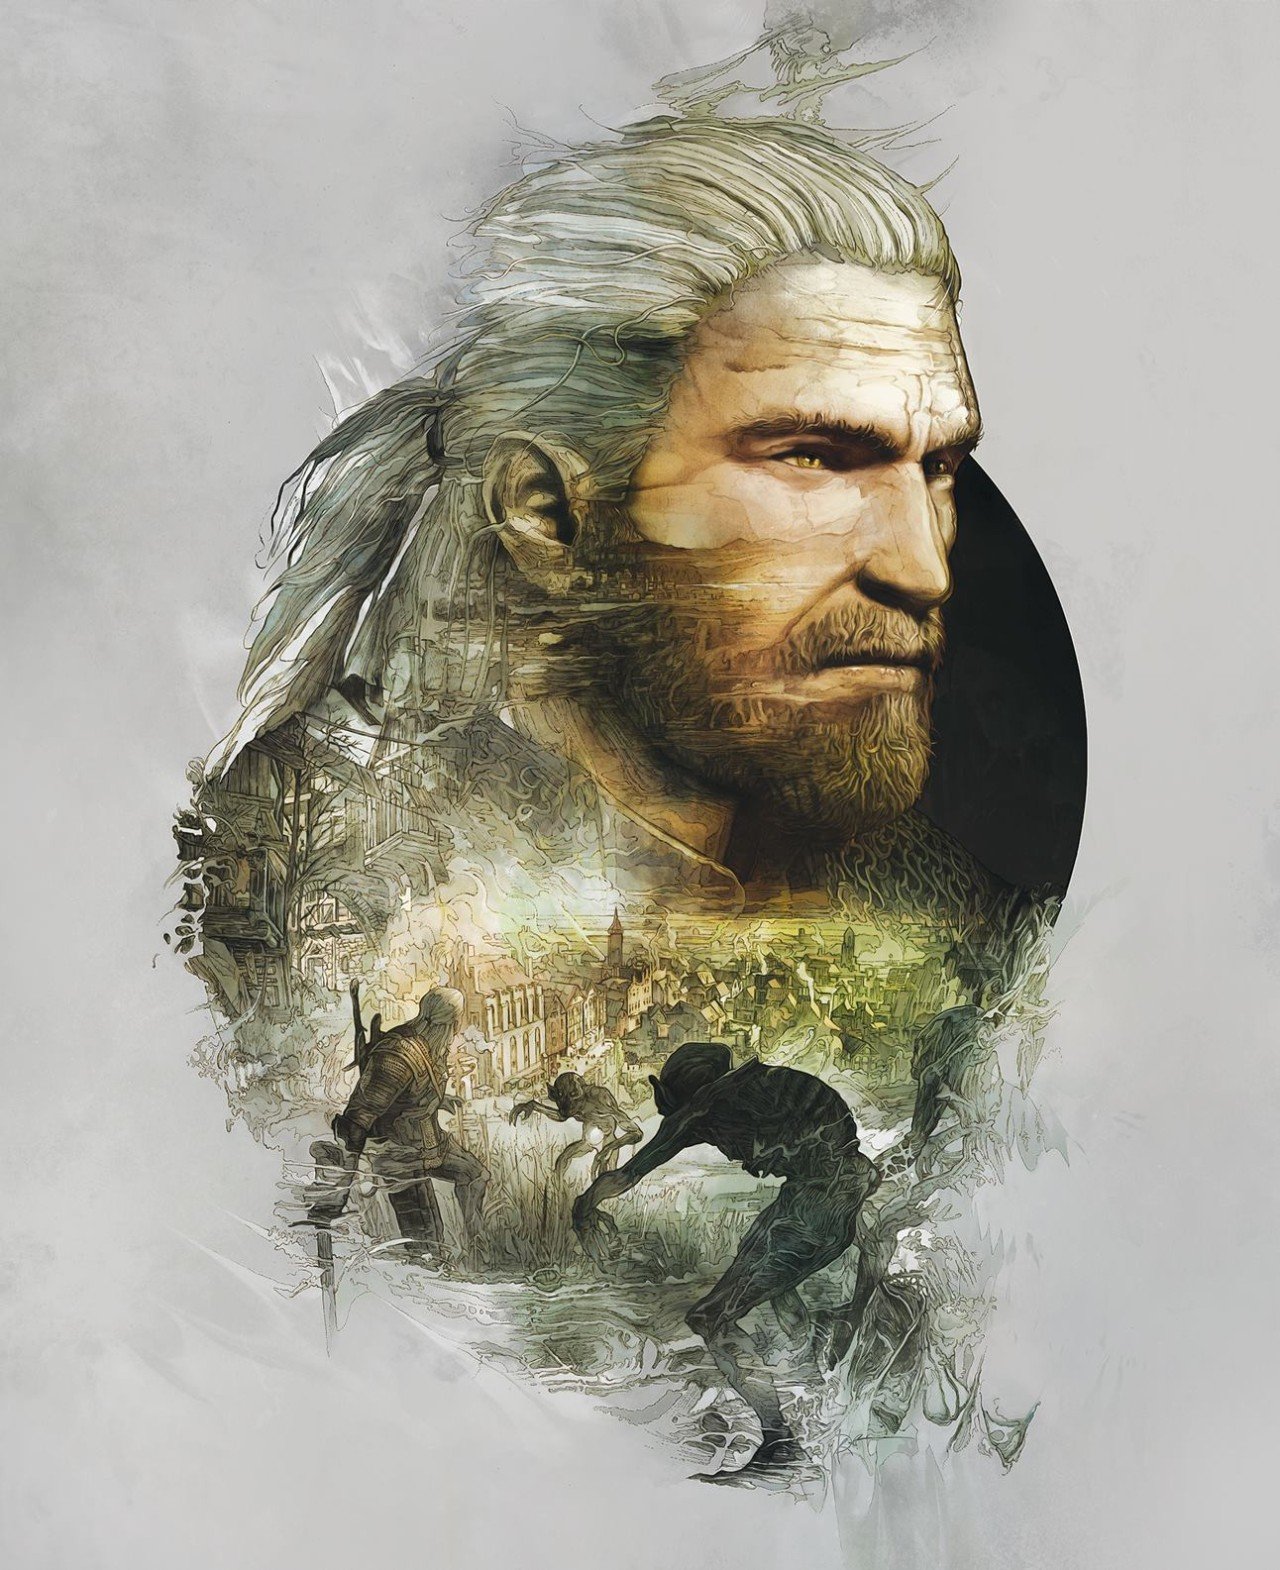 Poster du jeu vidéo The Witcher 3: Wild Hunt